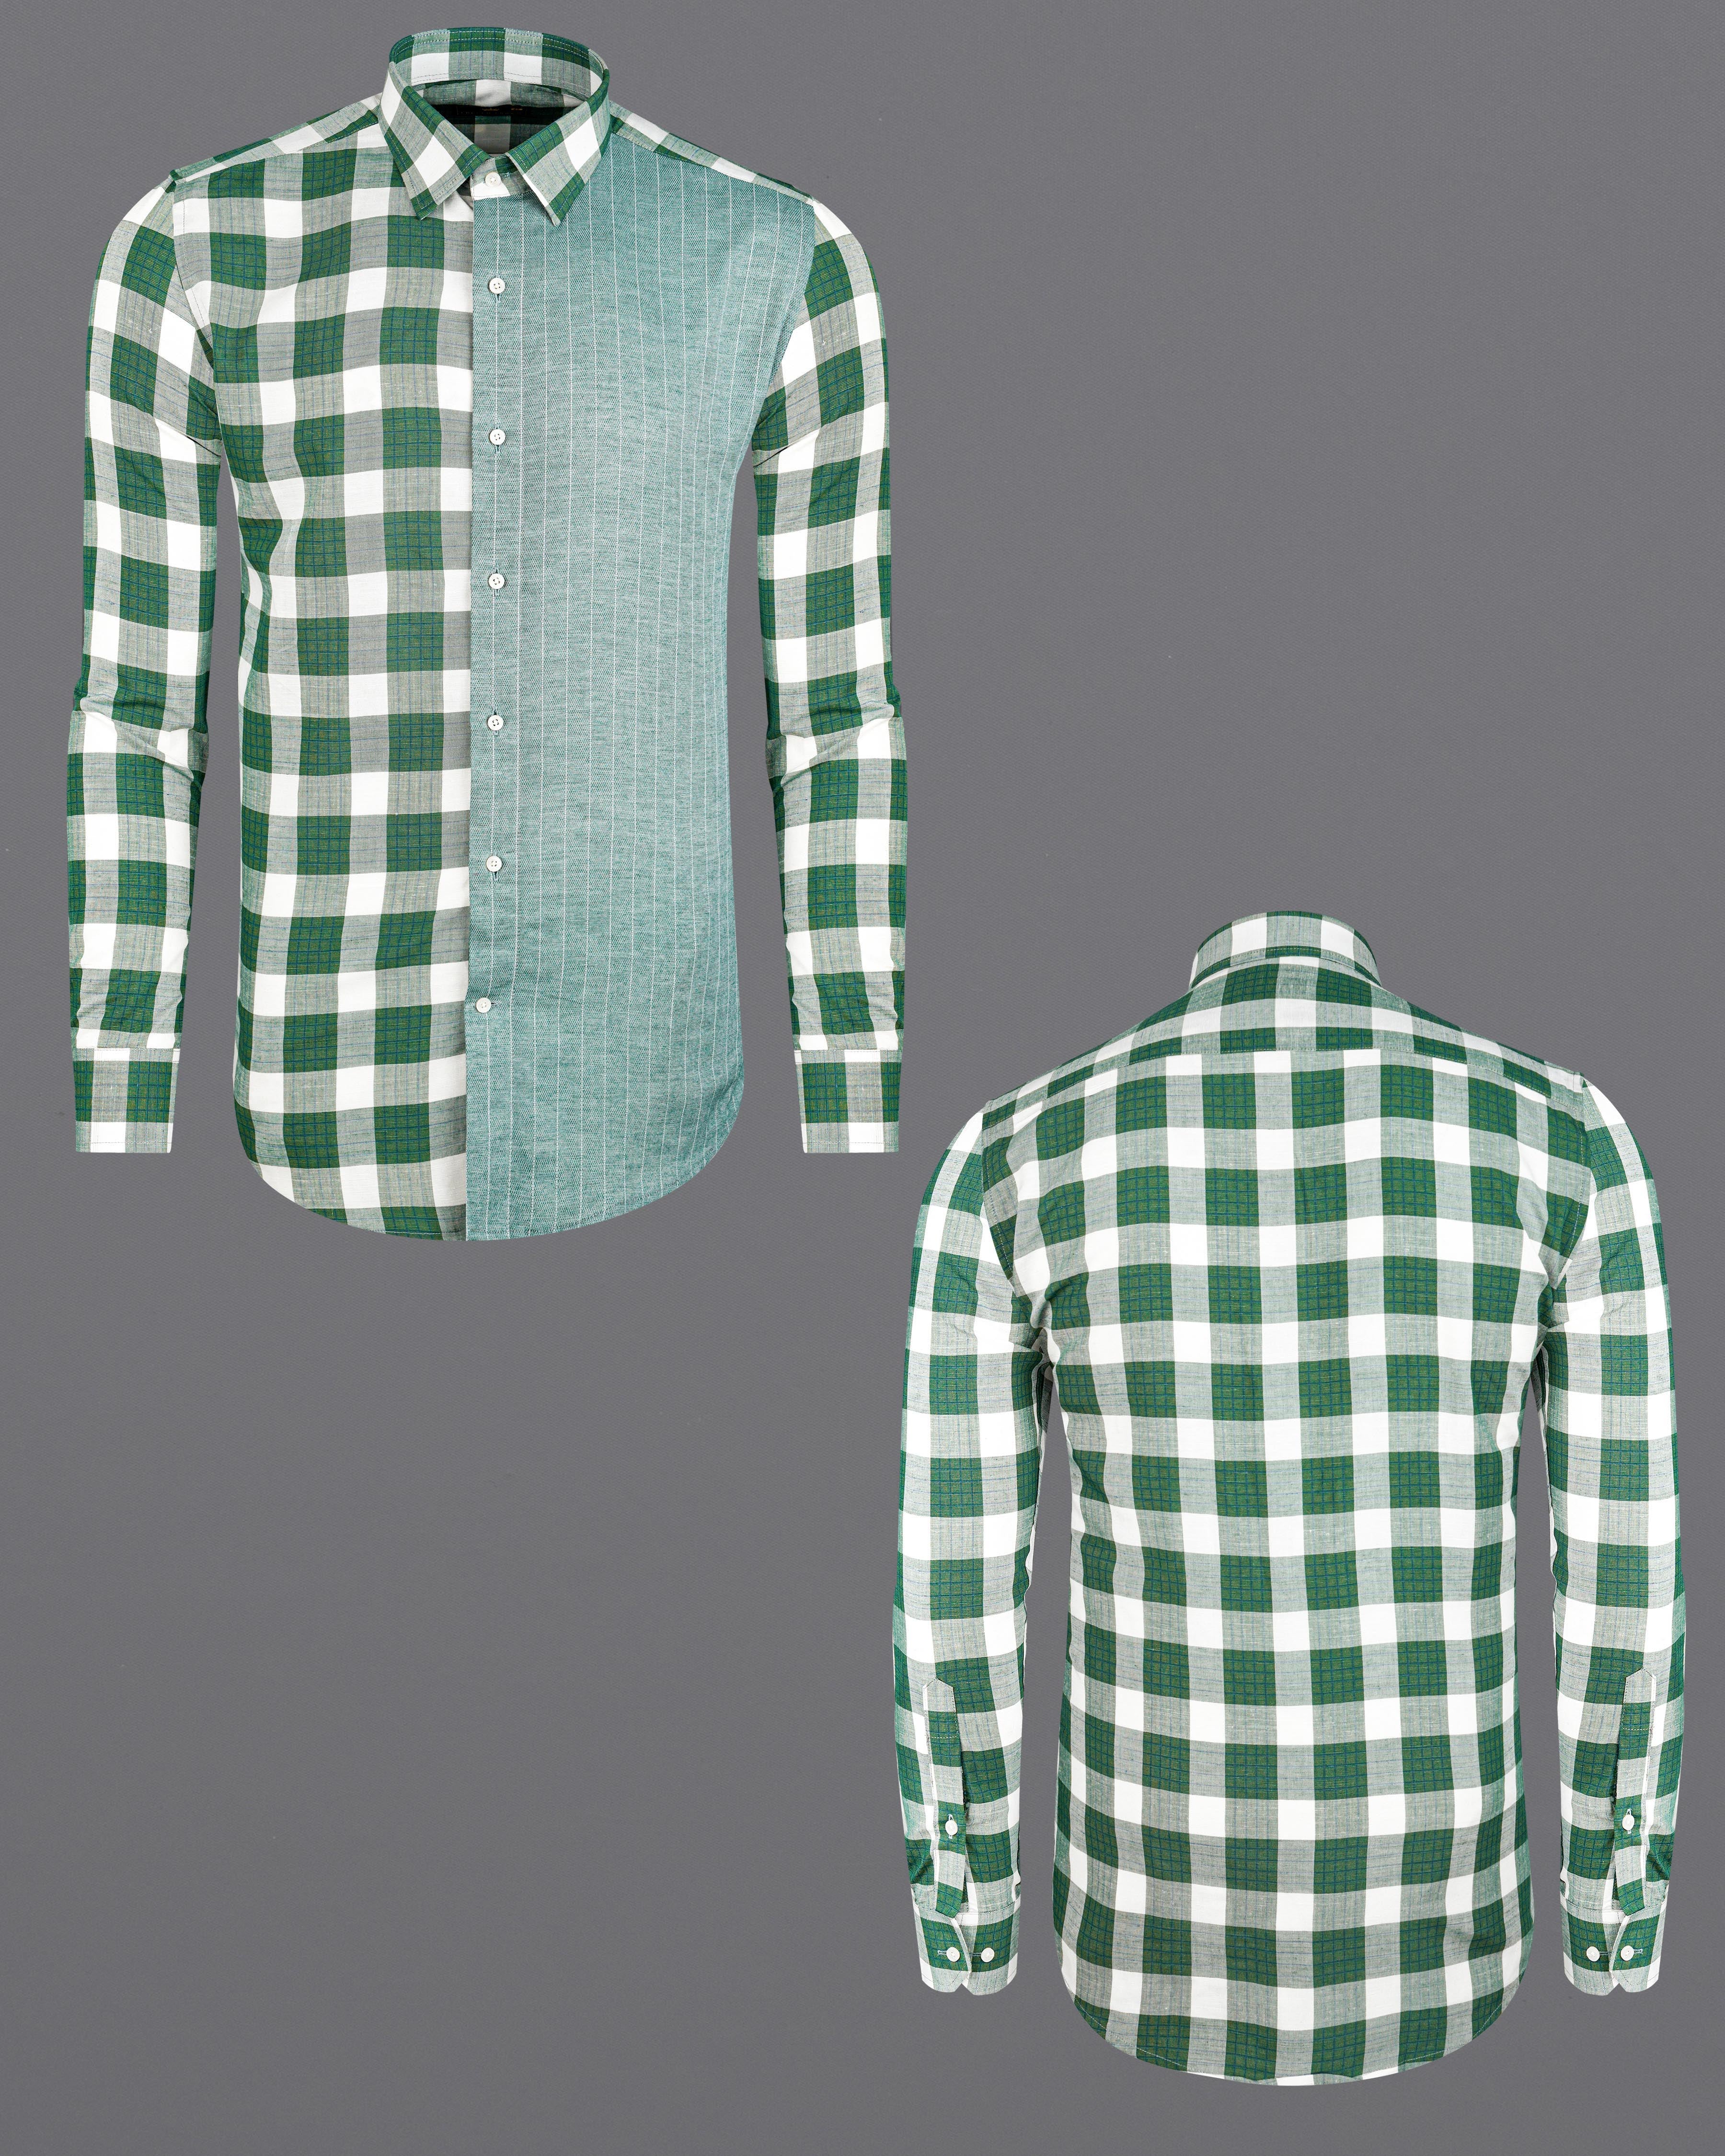 Ziggurat Green Striped with Camarone Green Checkered Luxurious Linen Designer Shirt 8416-P190-38, 8416-P190-H-38, 8416-P190-39,8416-P190-H-39, 8416-P190-40, 8416-P190-H-40, 8416-P190-42, 8416-P190-H-42, 8416-P190-44, 8416-P190-H-44, 8416-P190-46, 8416-P190-H-46, 8416-P190-48, 8416-P190-H-48, 8416-P190-50, 8416-P190-H-50, 8416-P190-52, 8416-P190-H-52